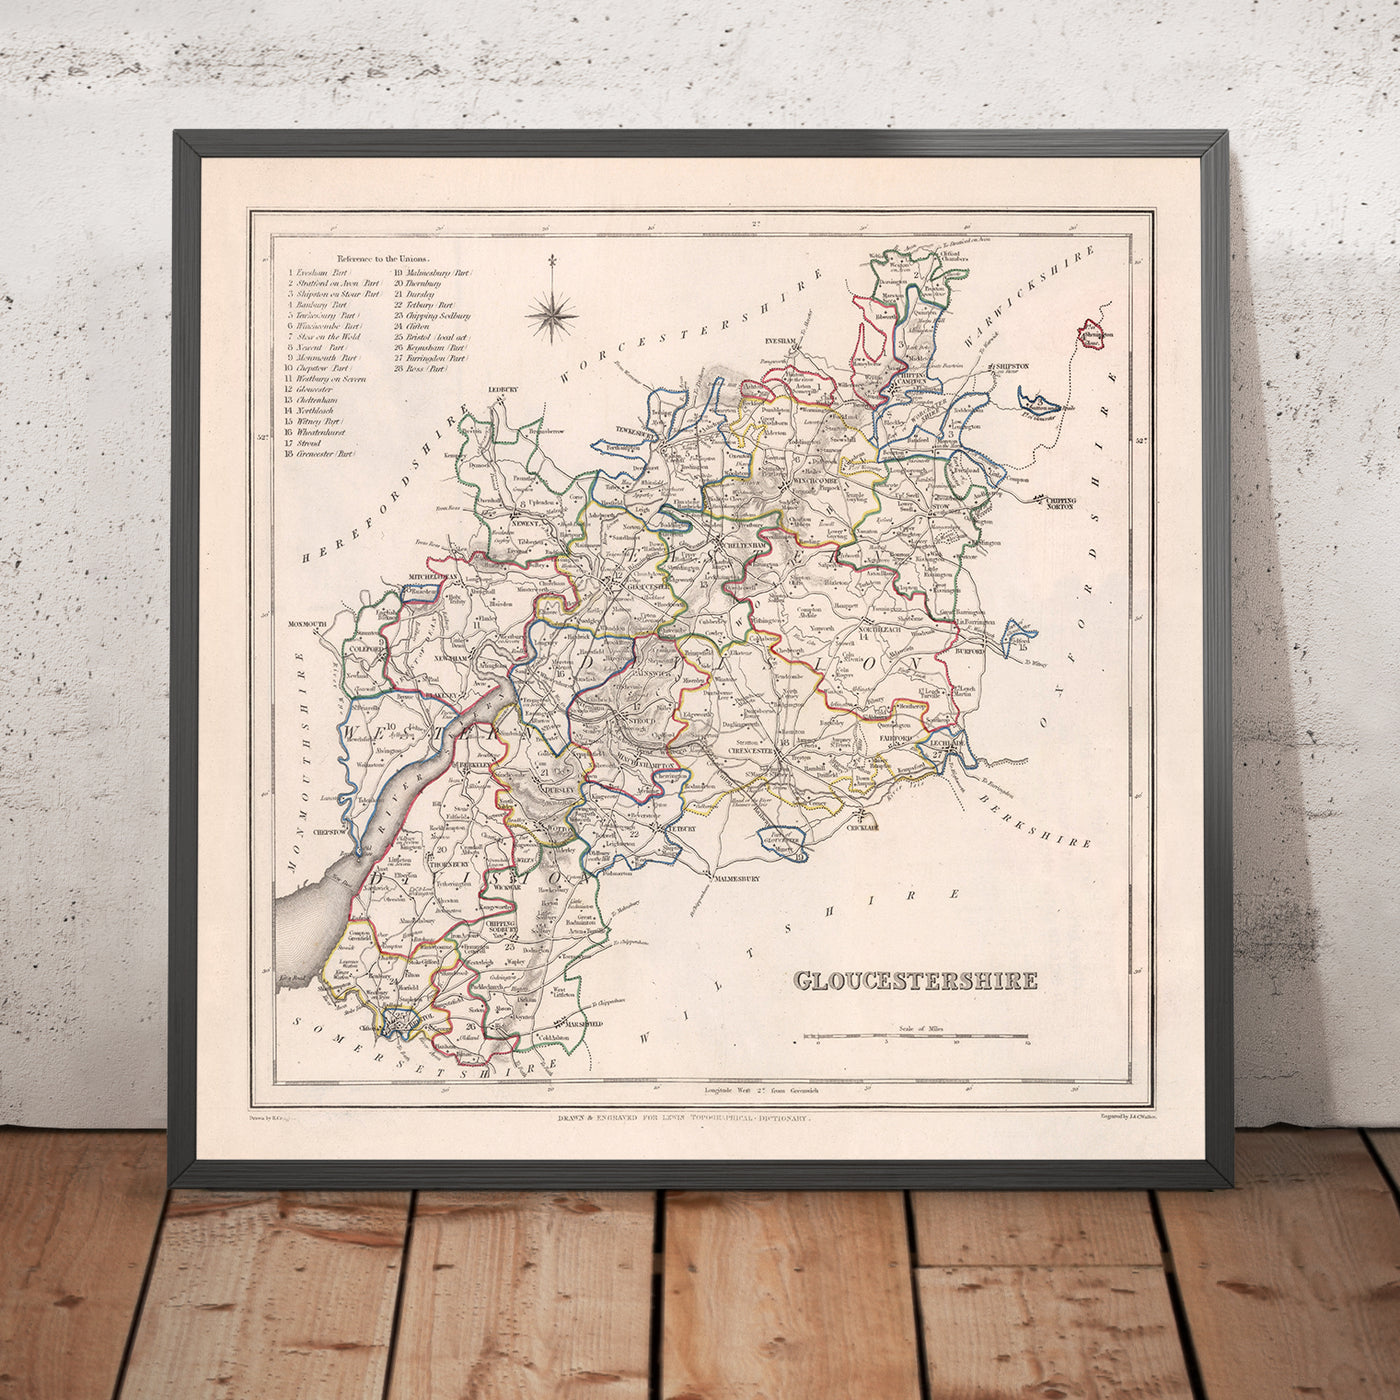 Mapa antiguo de Gloucestershire por Samuel Lewis, 1844: Bristol, Cheltenham, Cirencester, Stroud, Tewkesbury